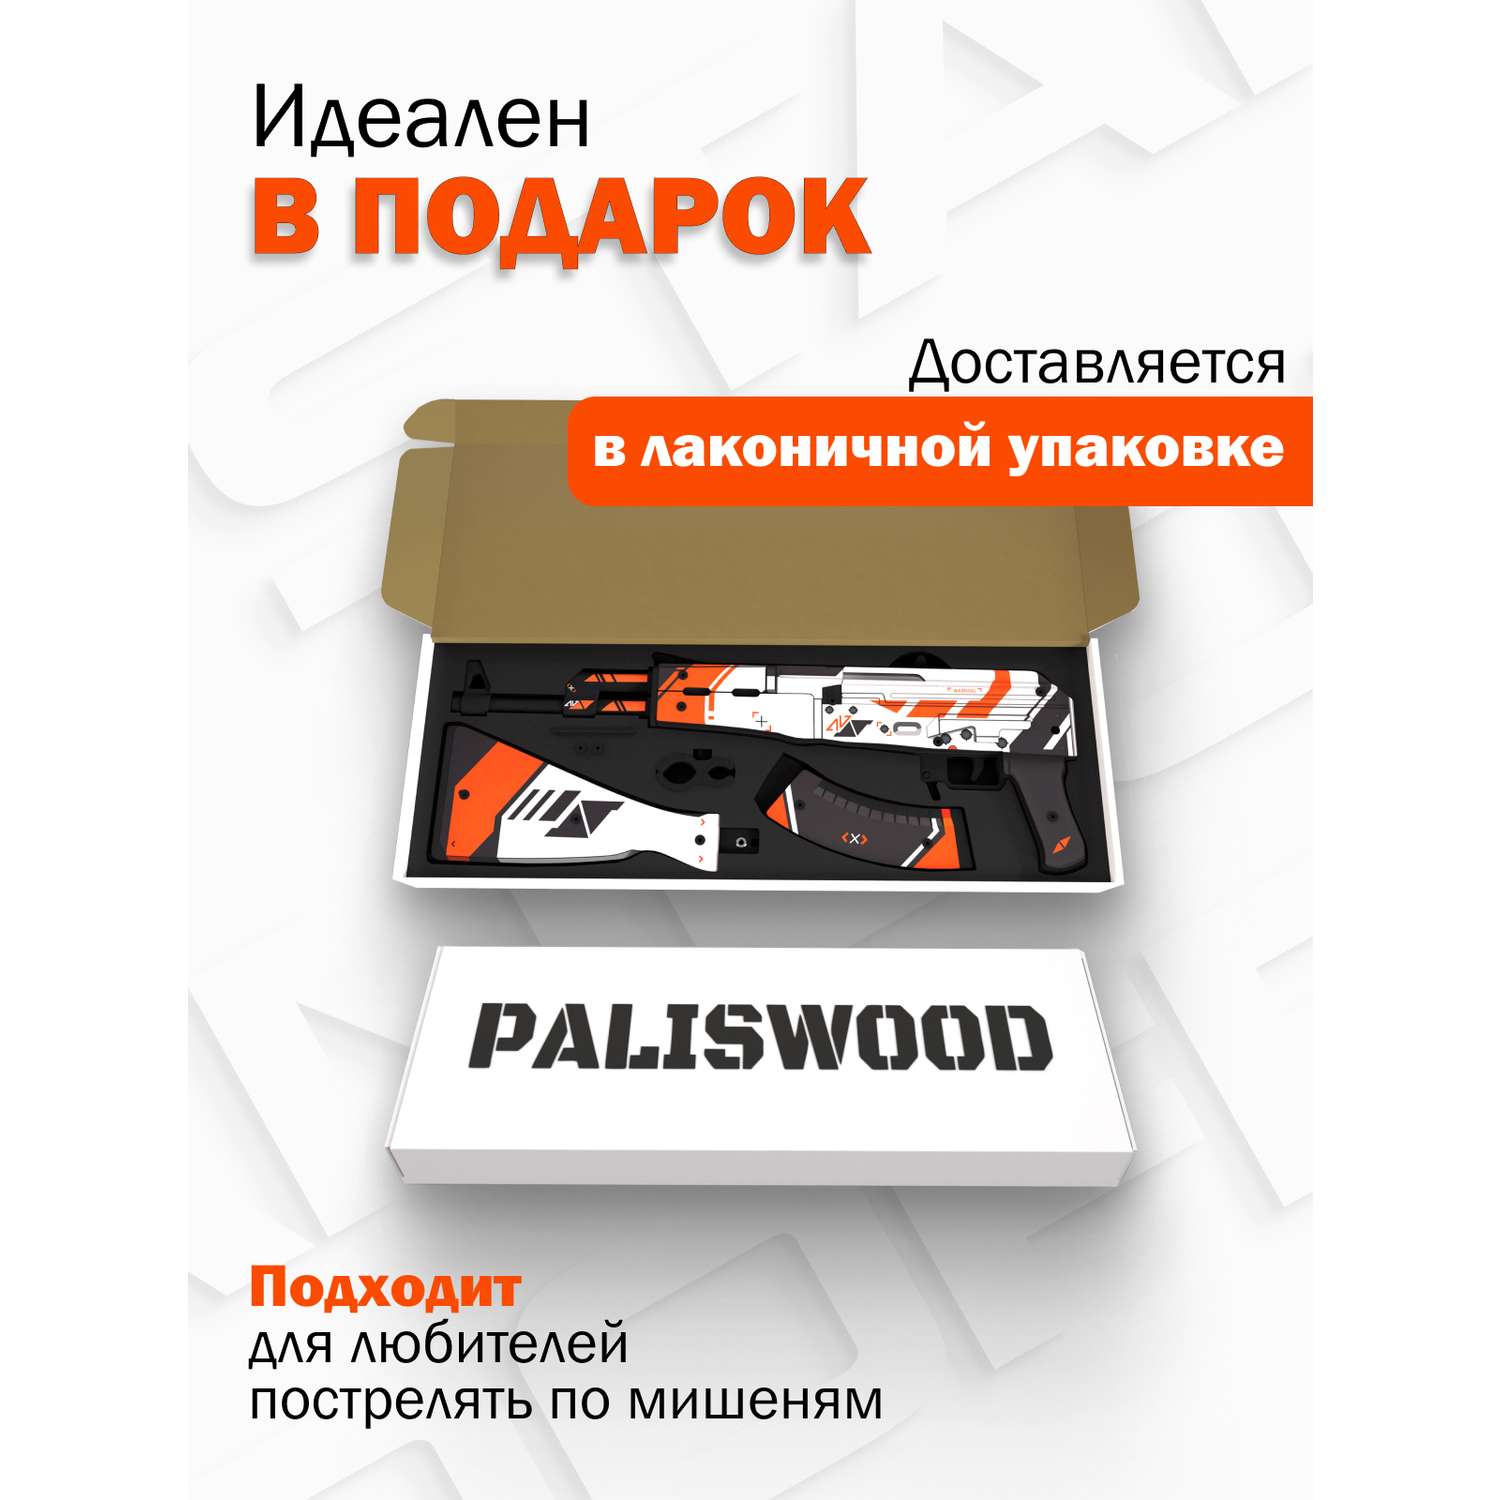 Автомат АК-47 Word of standoff PalisWood автомат резинкострел Азимов/Azimov - фото 2